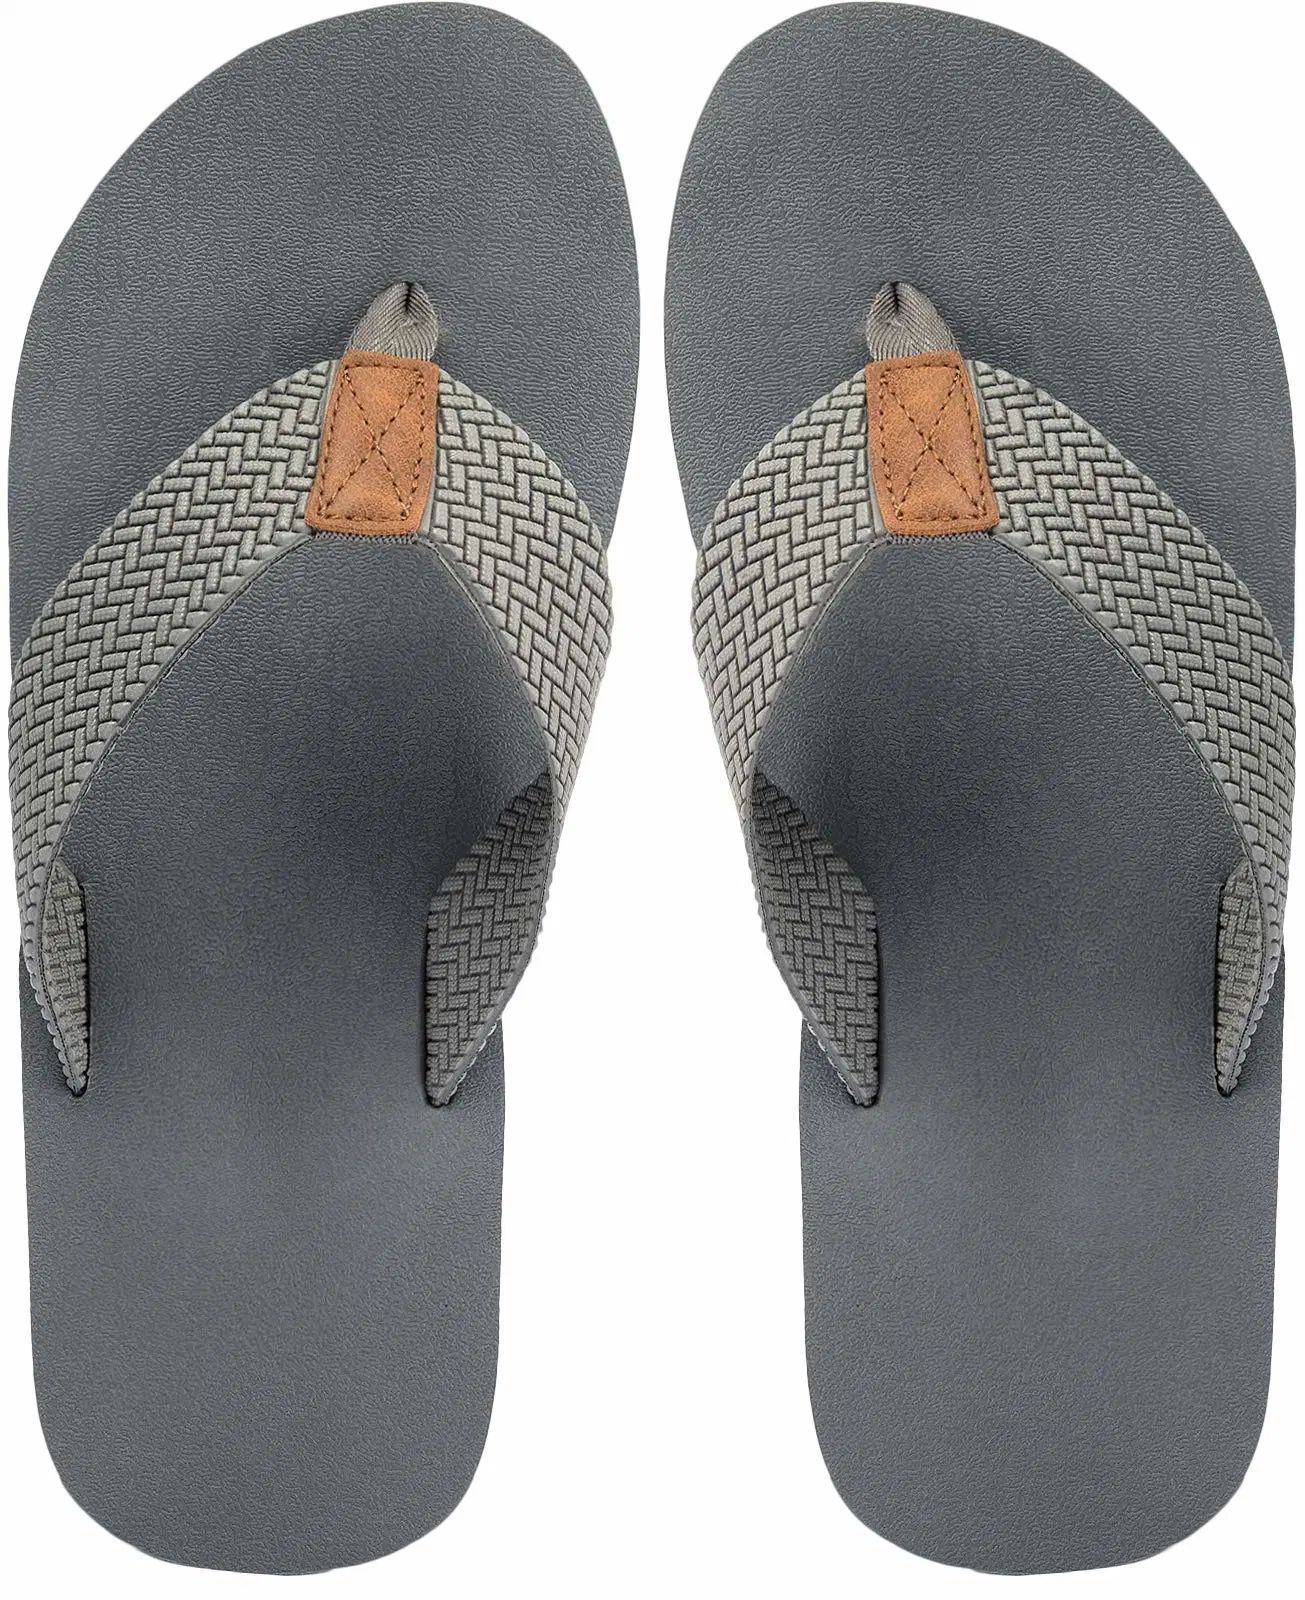 Plastic Bag/Carton Customized Color Slide Sandals EVA Foam Shoes Material